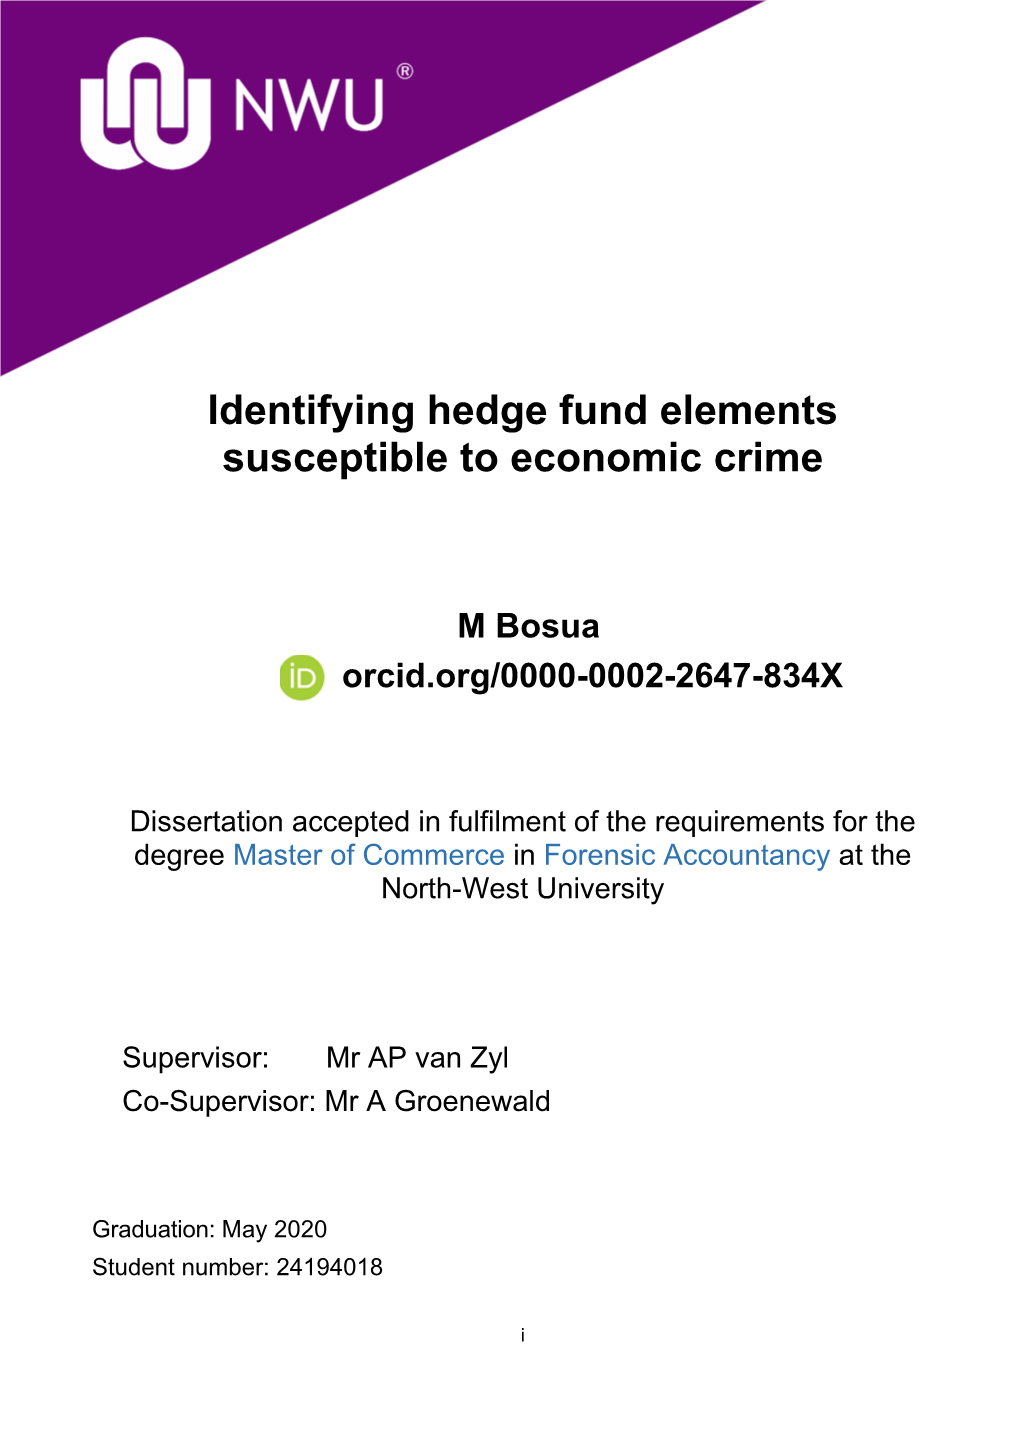 Identifying Hedge Fund Elements Susceptible to Economic Crime